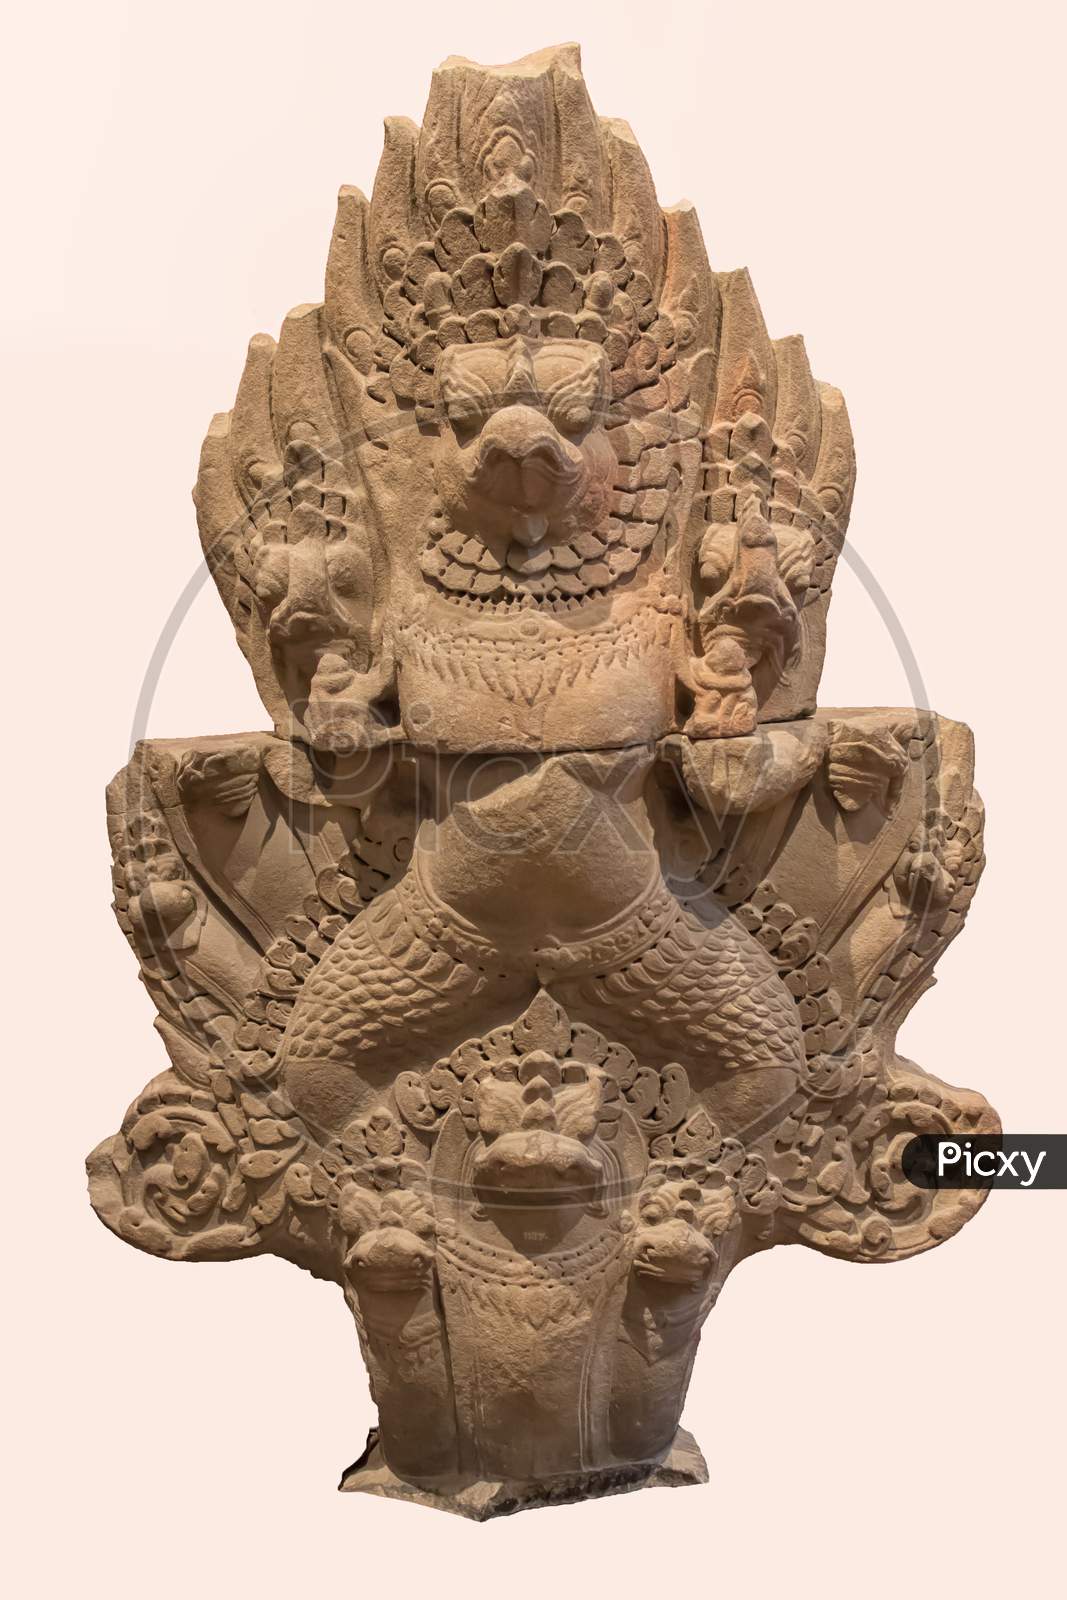 Archaeological Sculpture Of Garuda, The Mount Of Vishnu From Indian Mythology